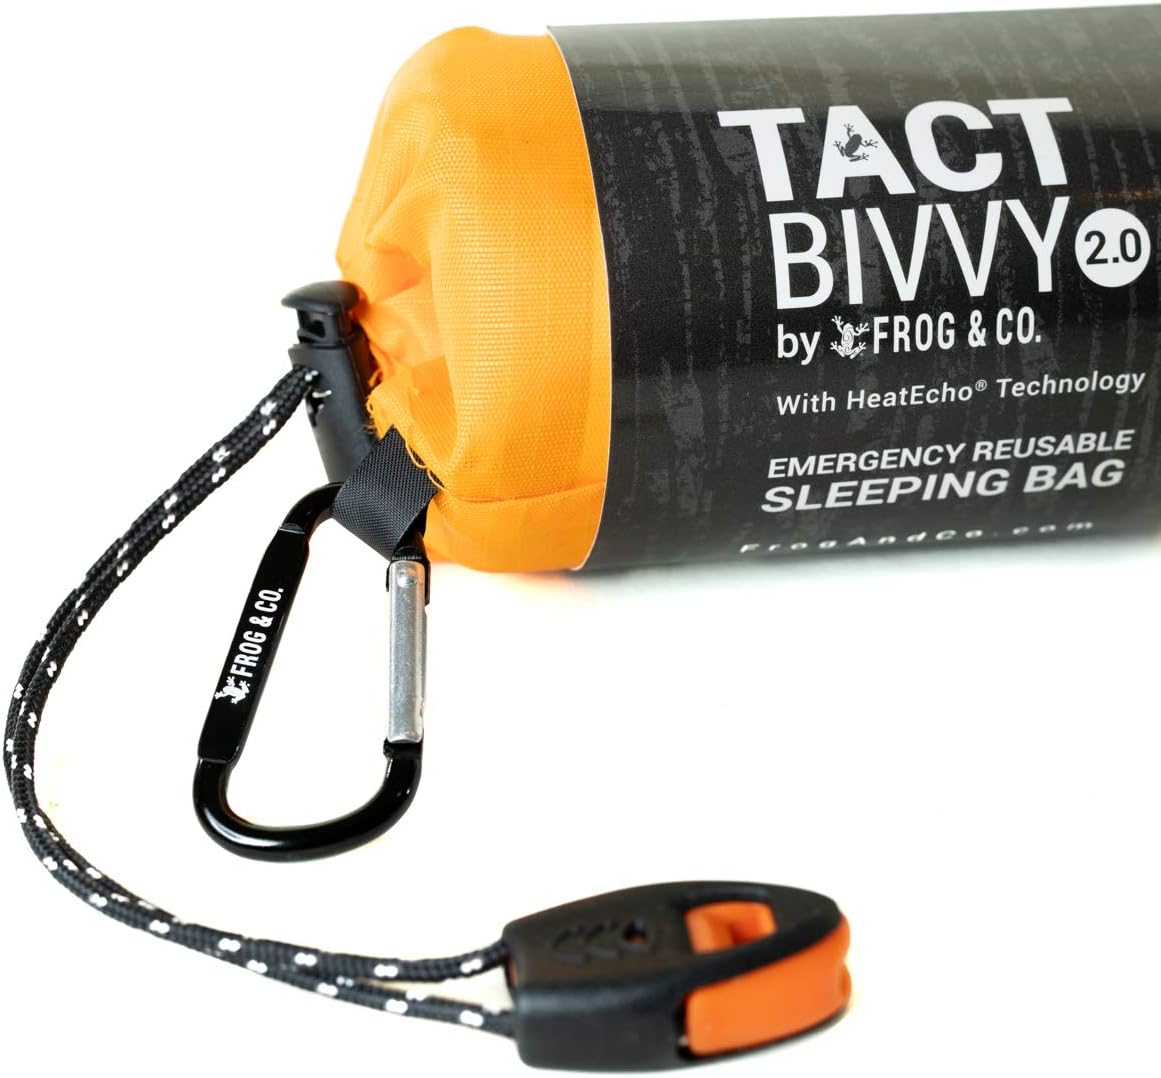 Survival Frog Tact Bivvy 2.0 Emergency Sleeping Bag w/Stuff Sack, Carabiner, Survival Whistle, ParaTinder - Compact, Lightweight, Waterproof, Reusable, Thermal Bivy Sack Cover, Shelter Kit 